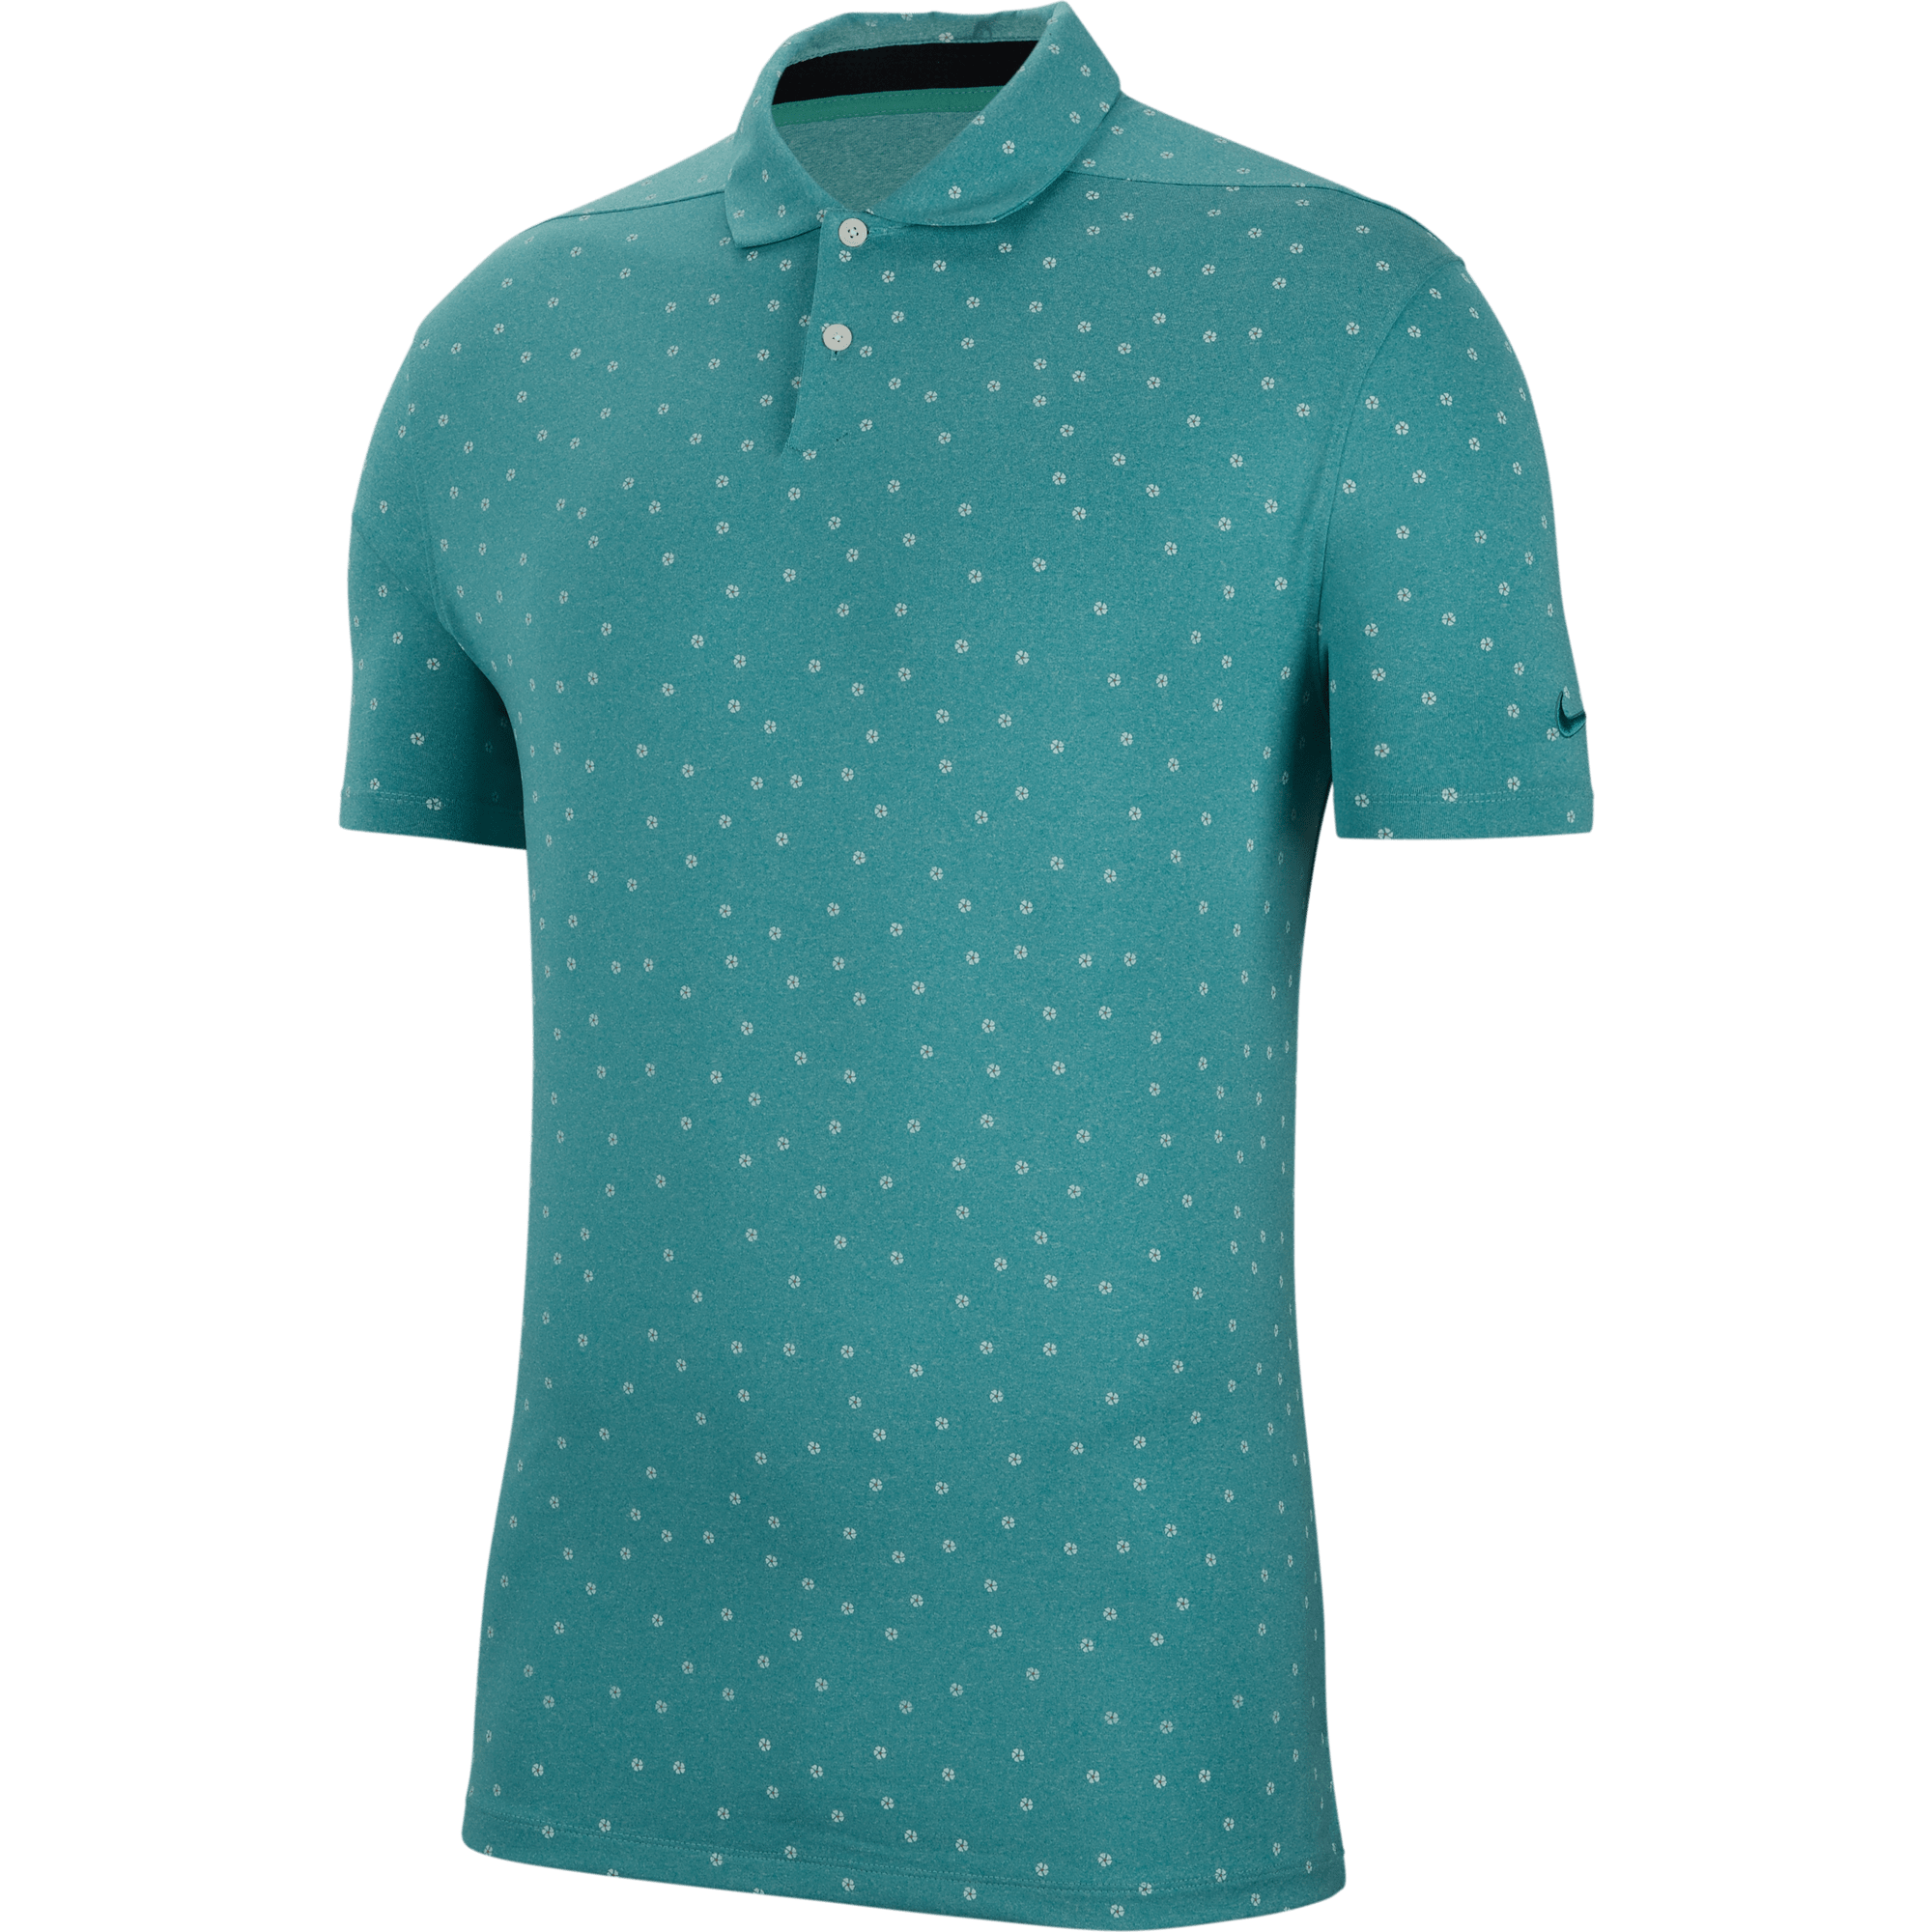 puma golf shirts clearance